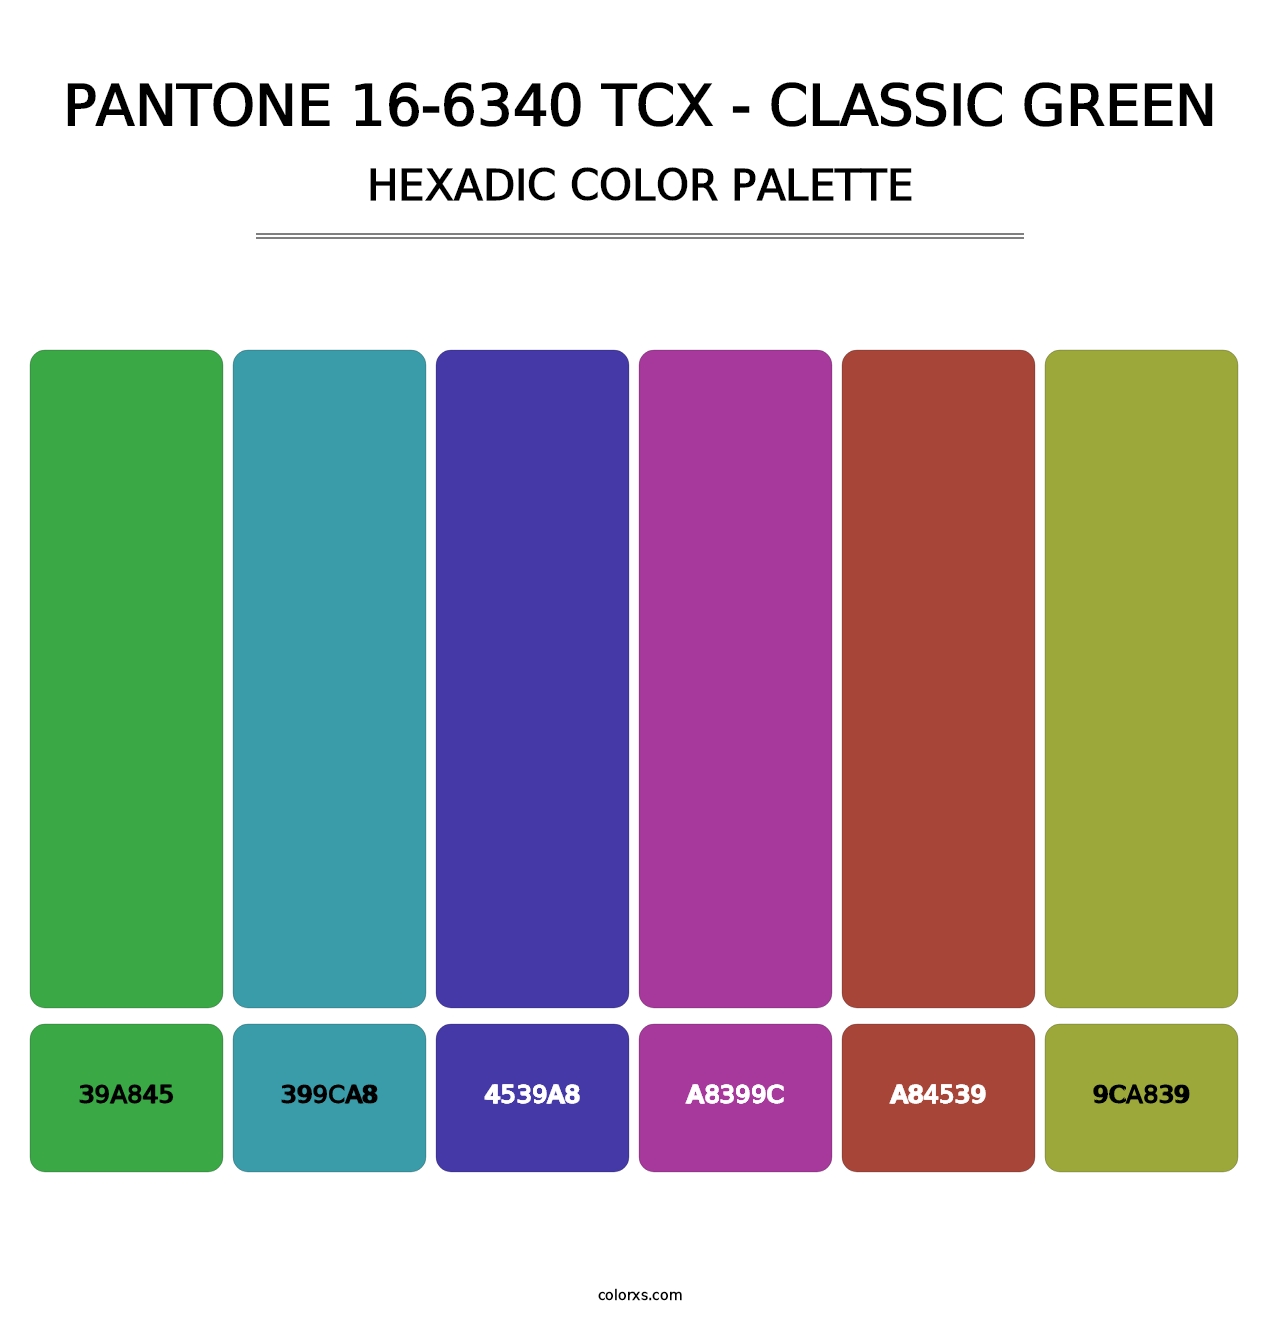 PANTONE 16-6340 TCX - Classic Green - Hexadic Color Palette